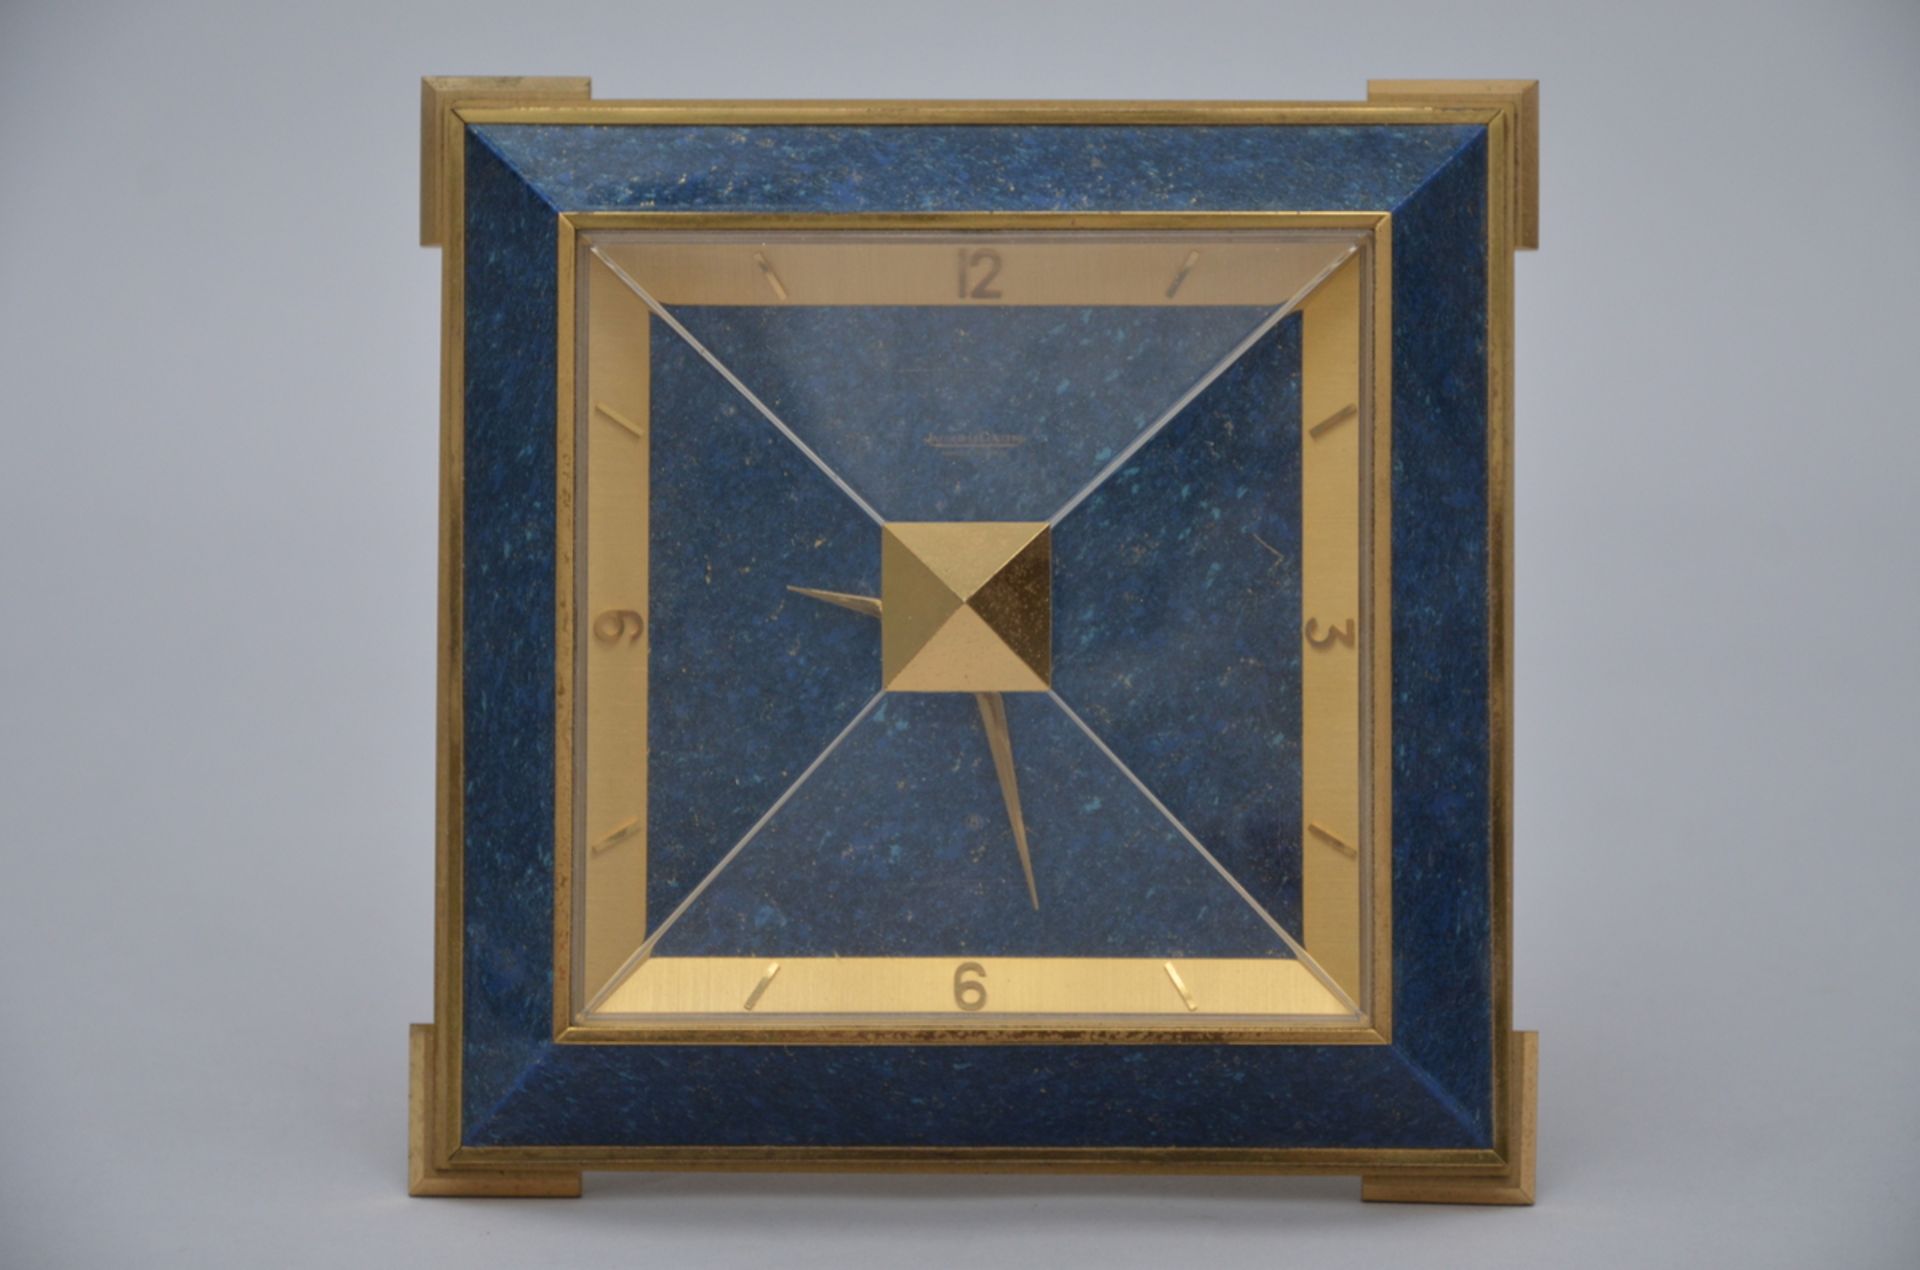 Jaeger-LeCoultre: pyramid desk clock in faux lapis (10x19.5x19.5 cm) - Image 2 of 4